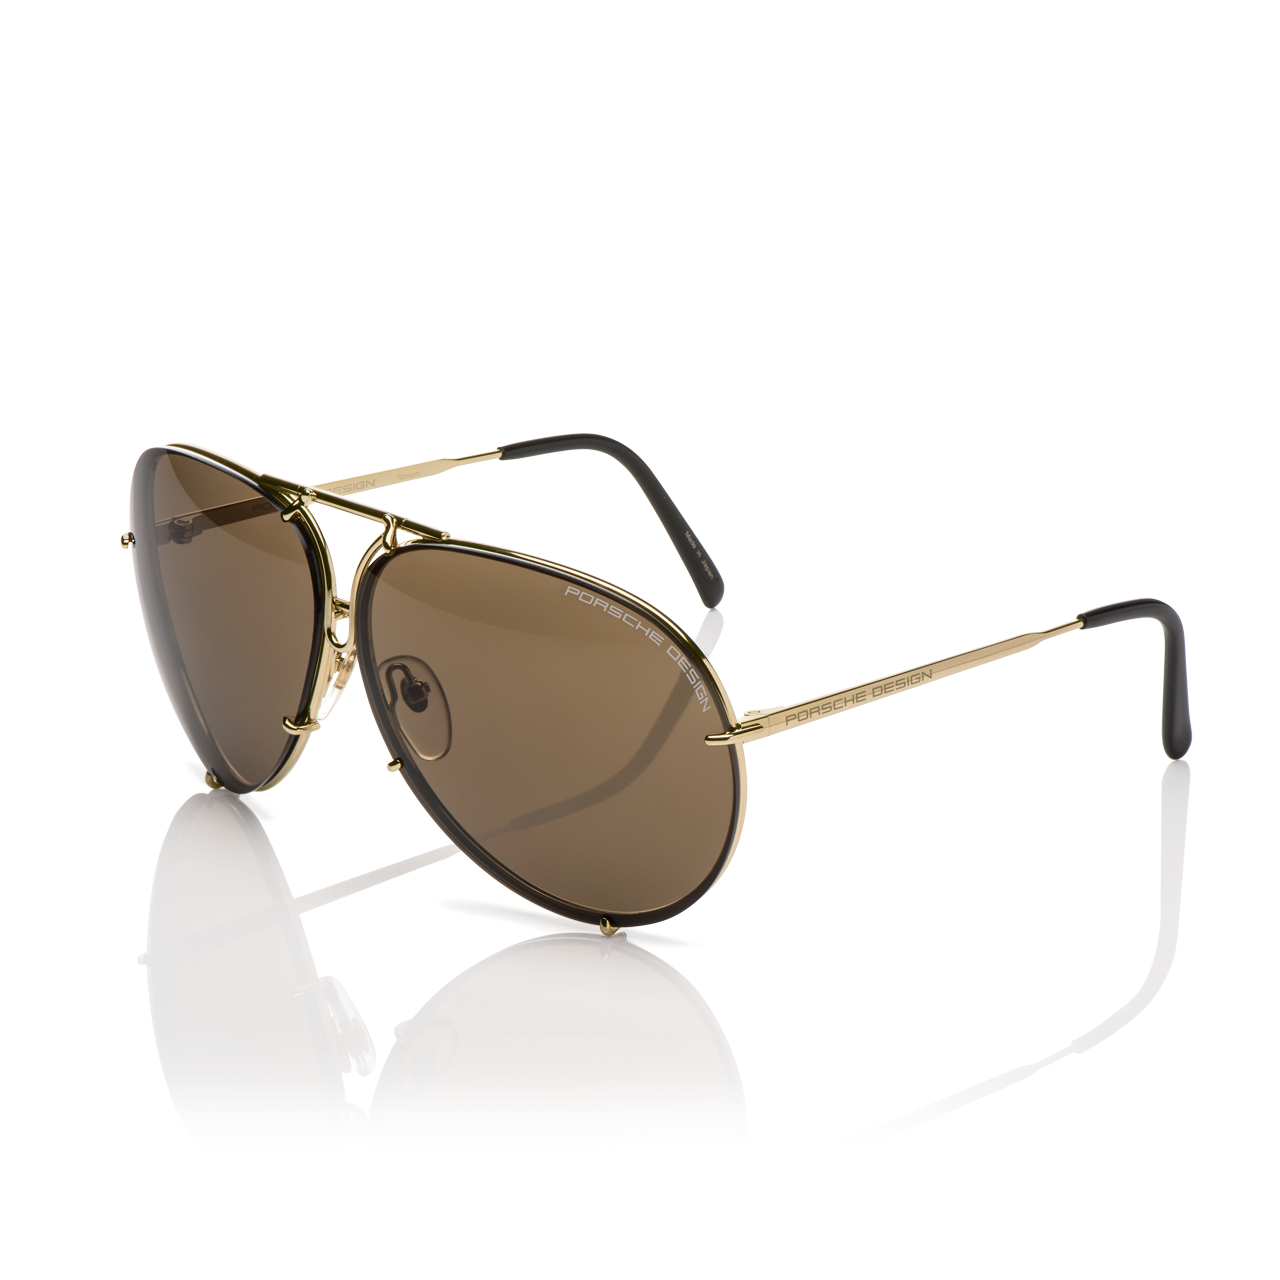 Sunglasses Car Porsche Design Sunglass Aviator Clipart